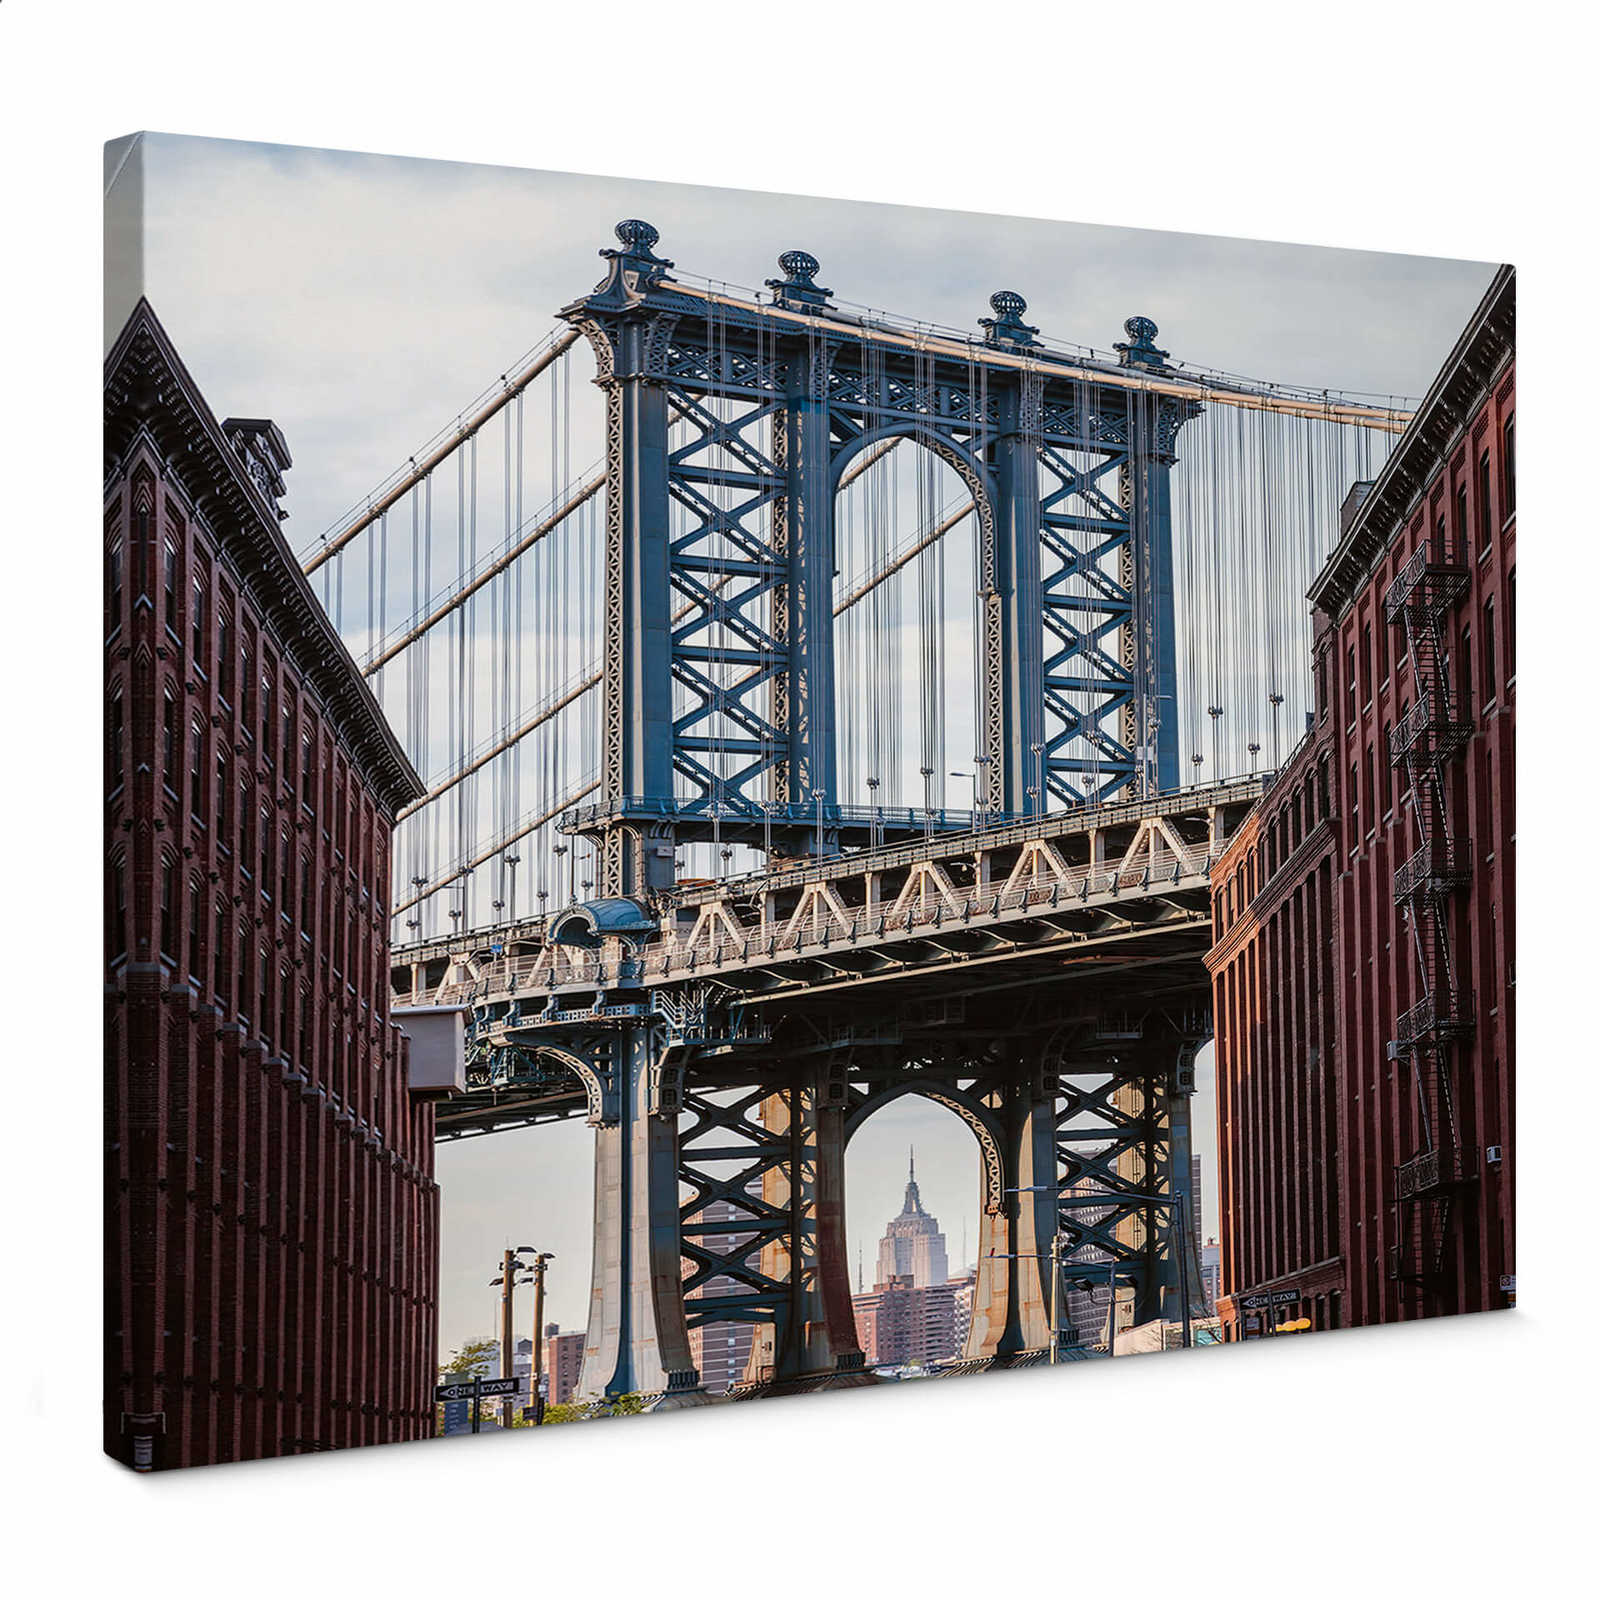         Canvas print New York Brooklyn Bridge, photo by Colombo
    